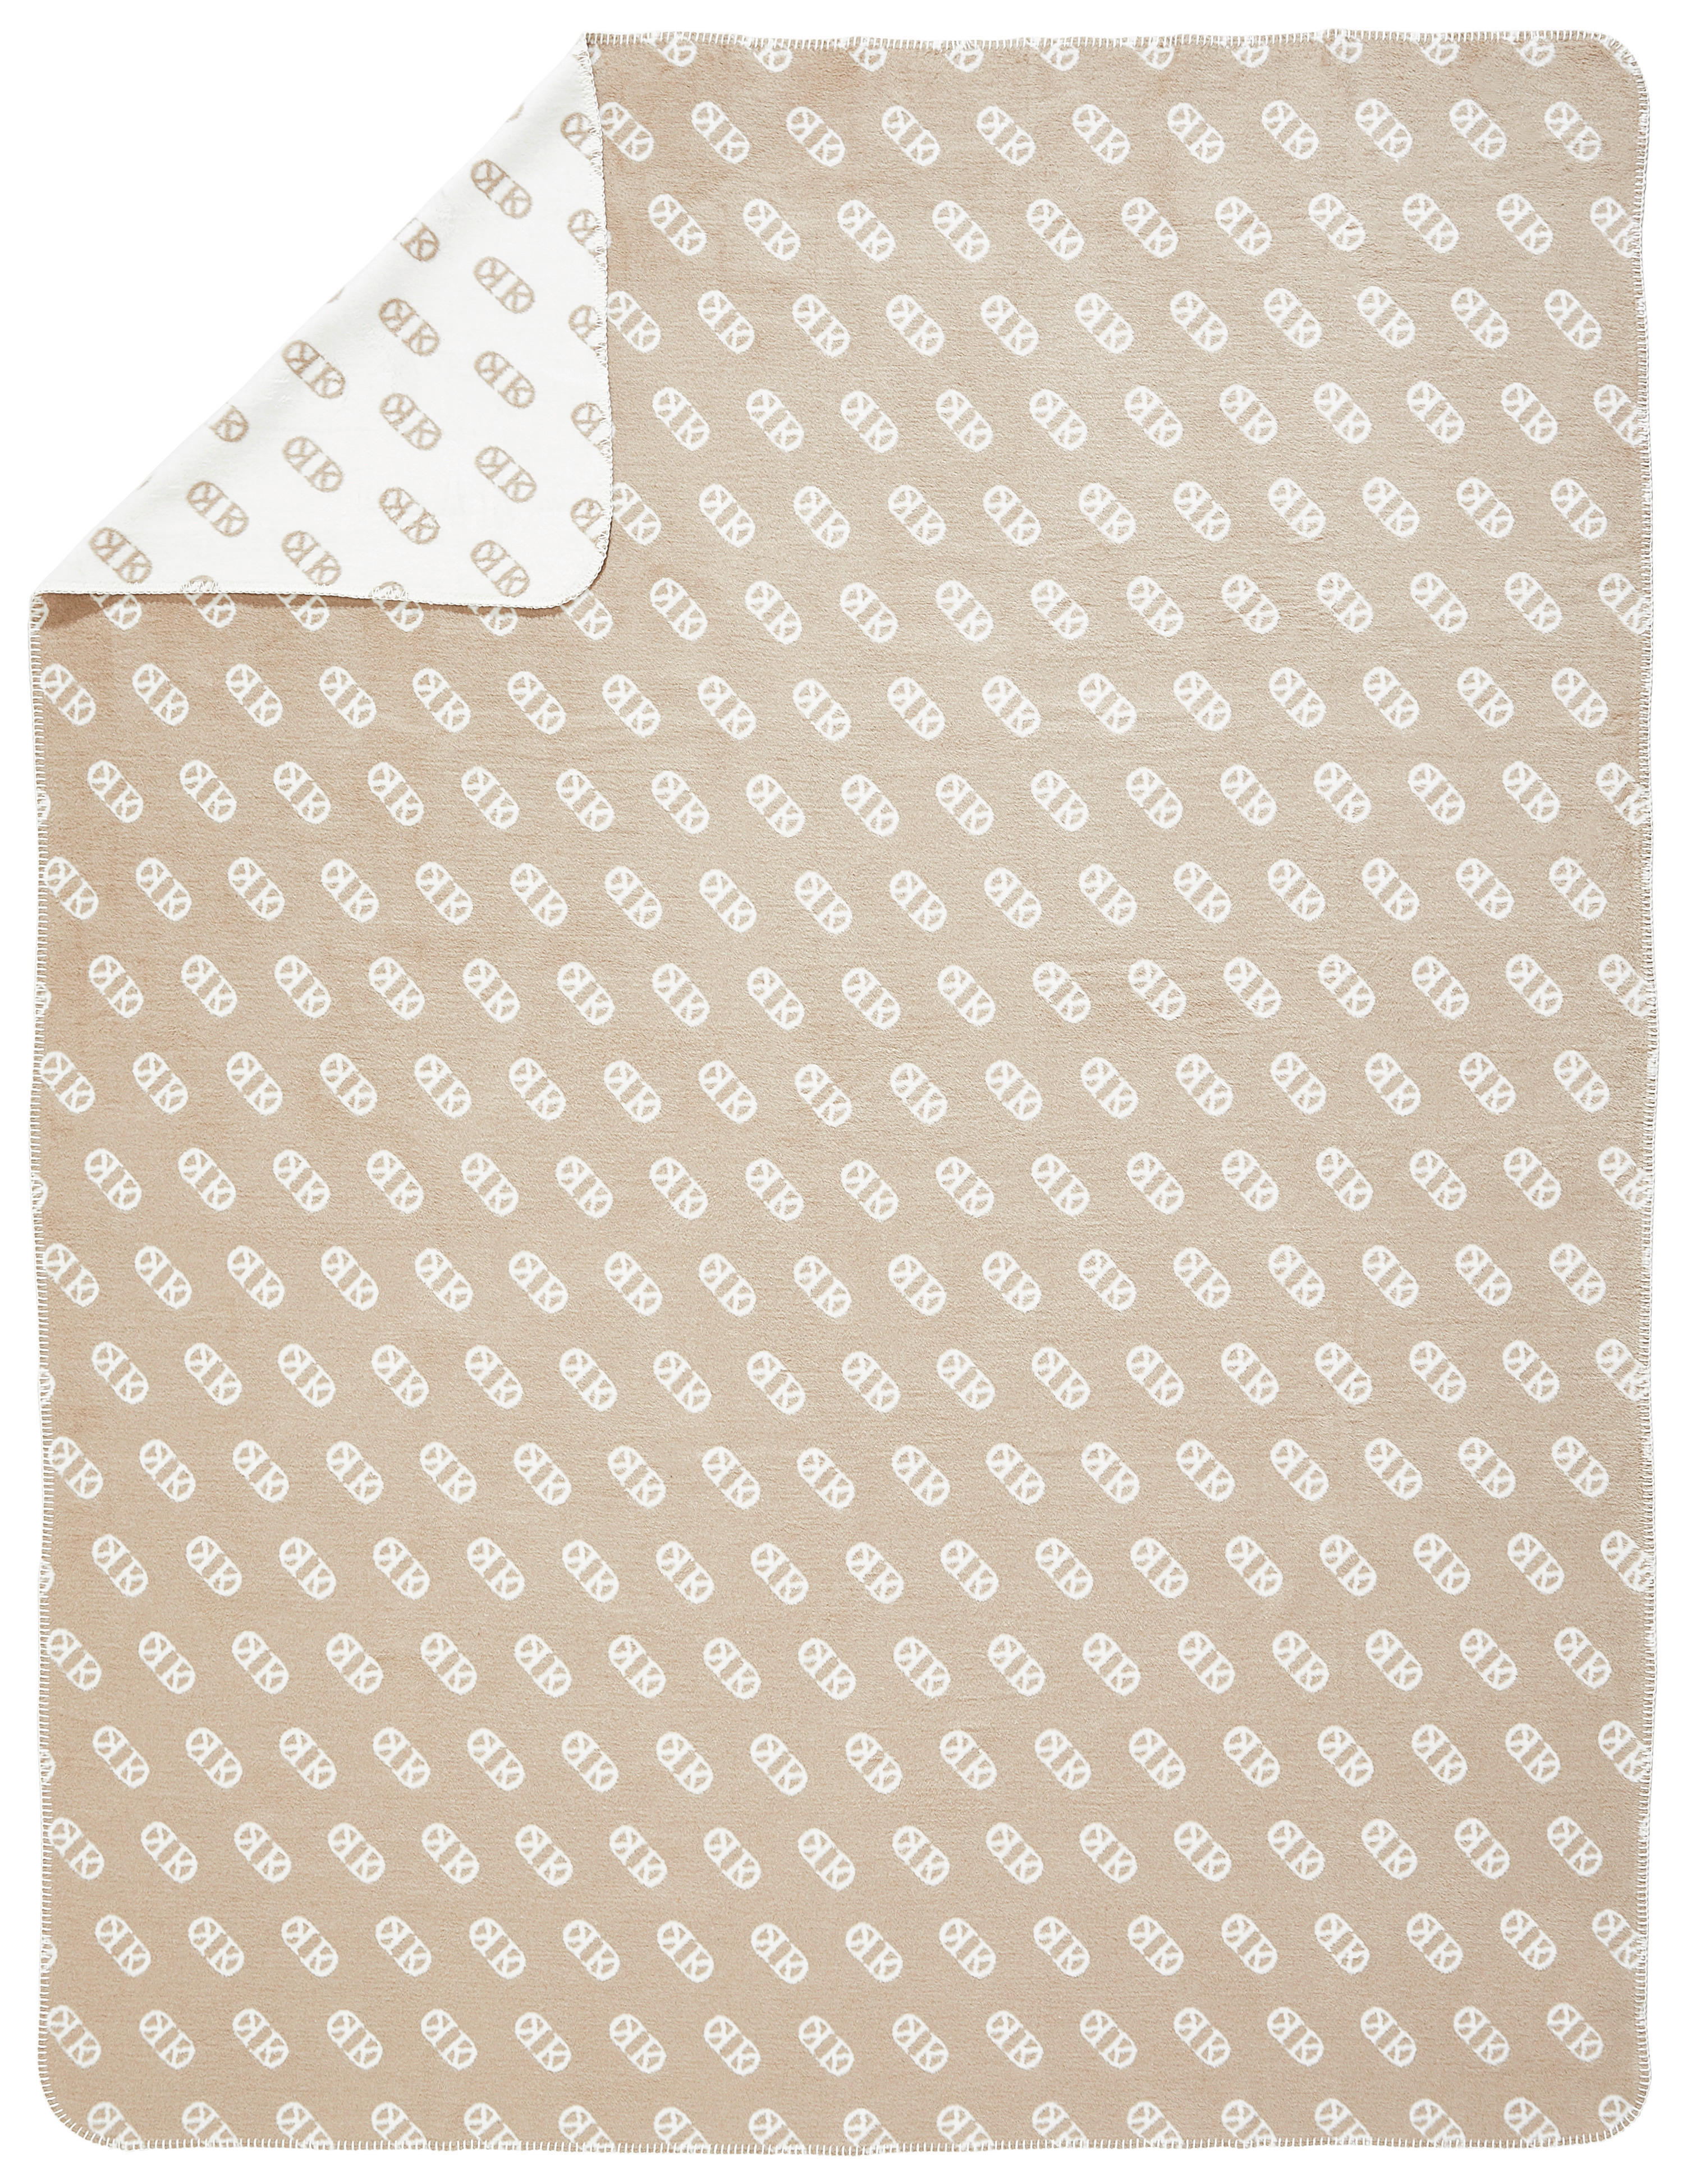 WOHNDECKE BASIC 150/200 cm  - Taupe/Weiß, Design, Textil (150/200cm) - Dieter Knoll